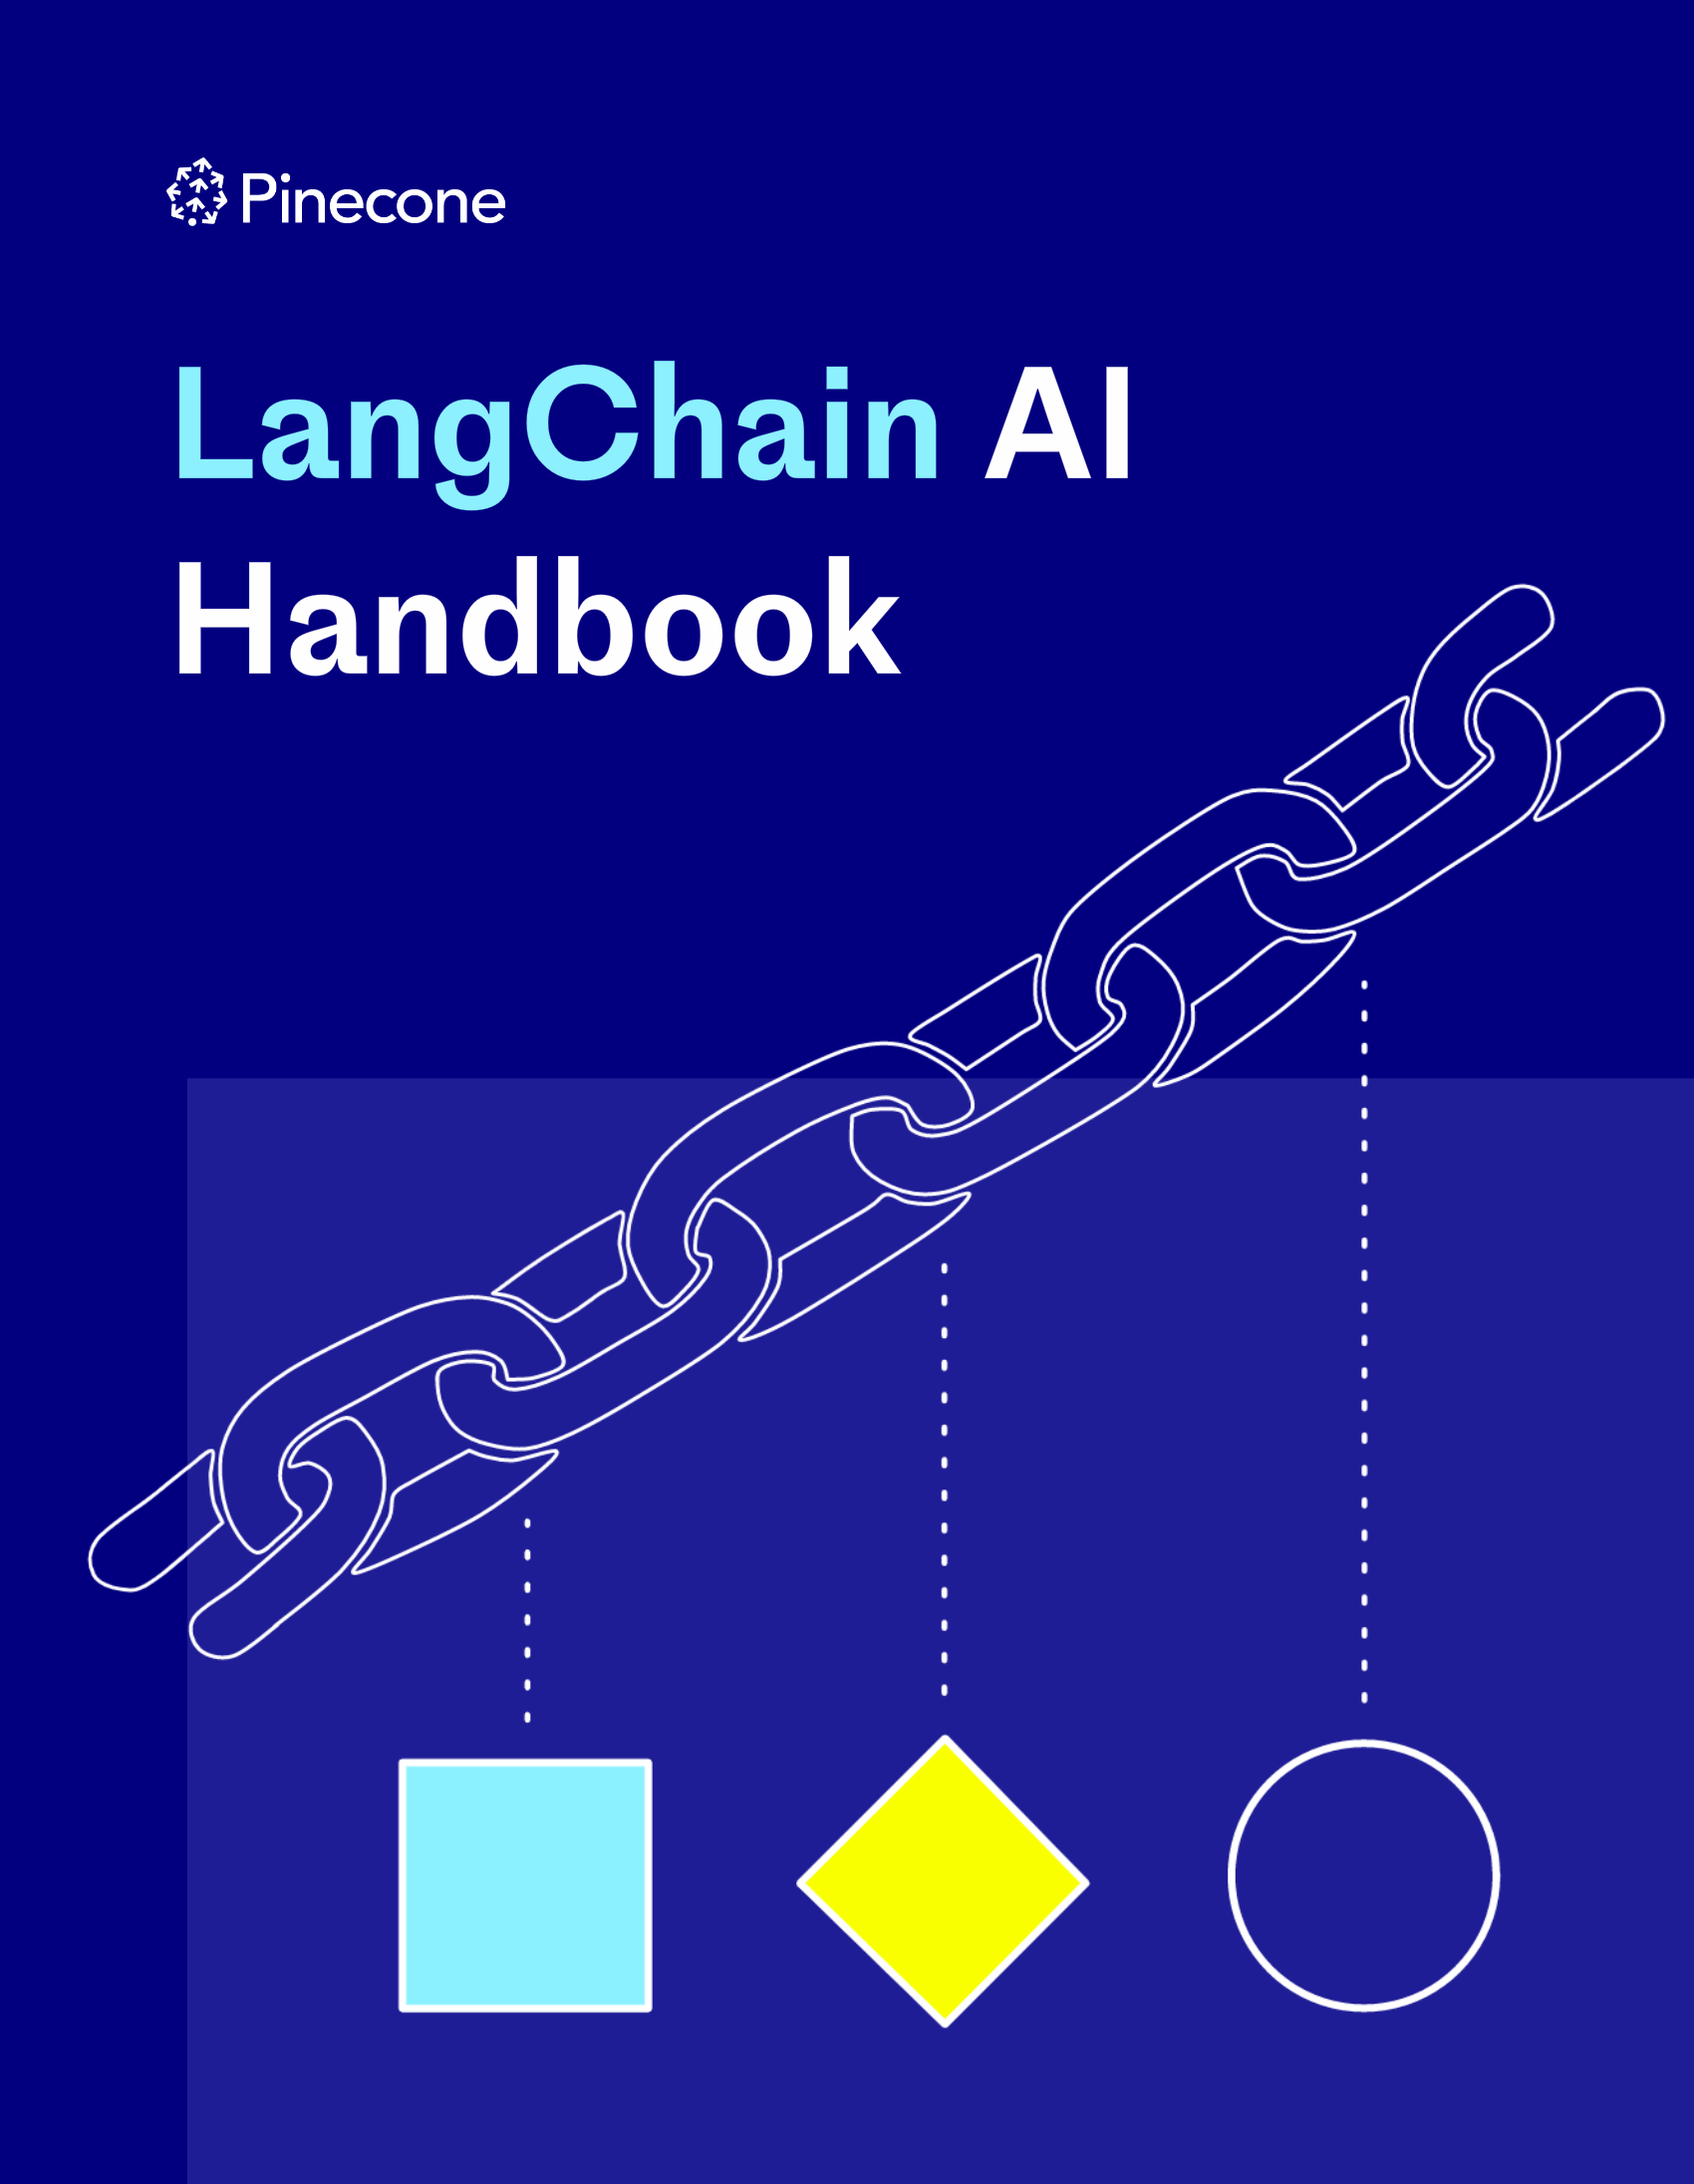 LangChain AI Handbook by James Briggs and Francisco Ingham